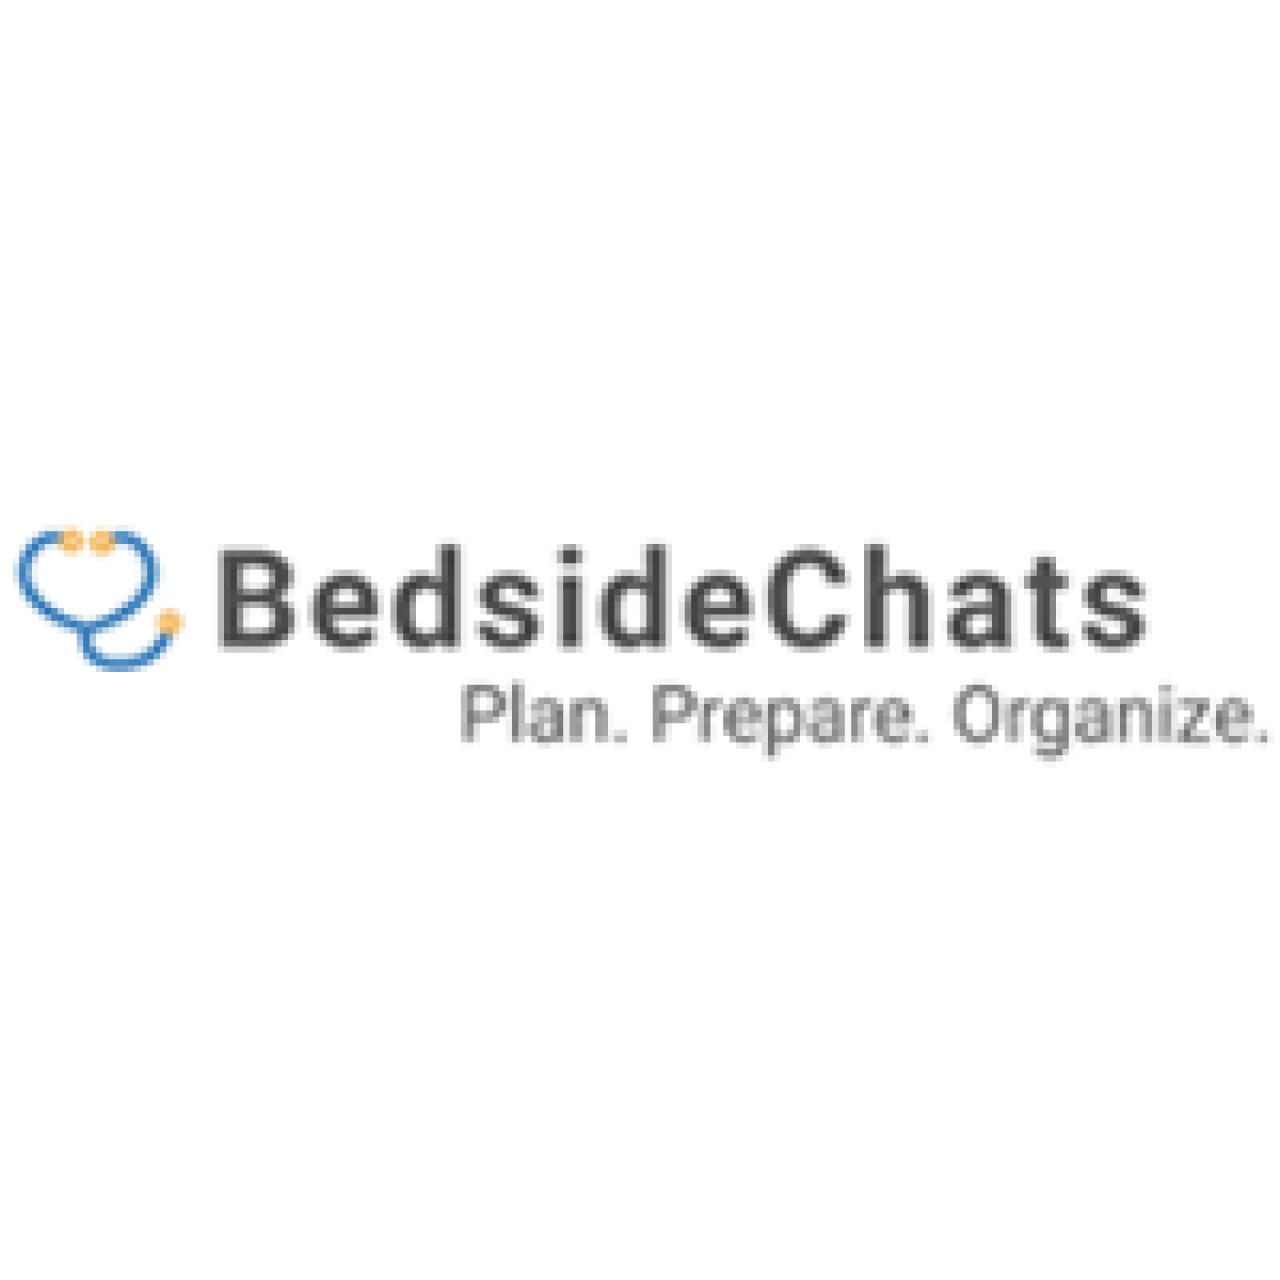 bedside chats logo